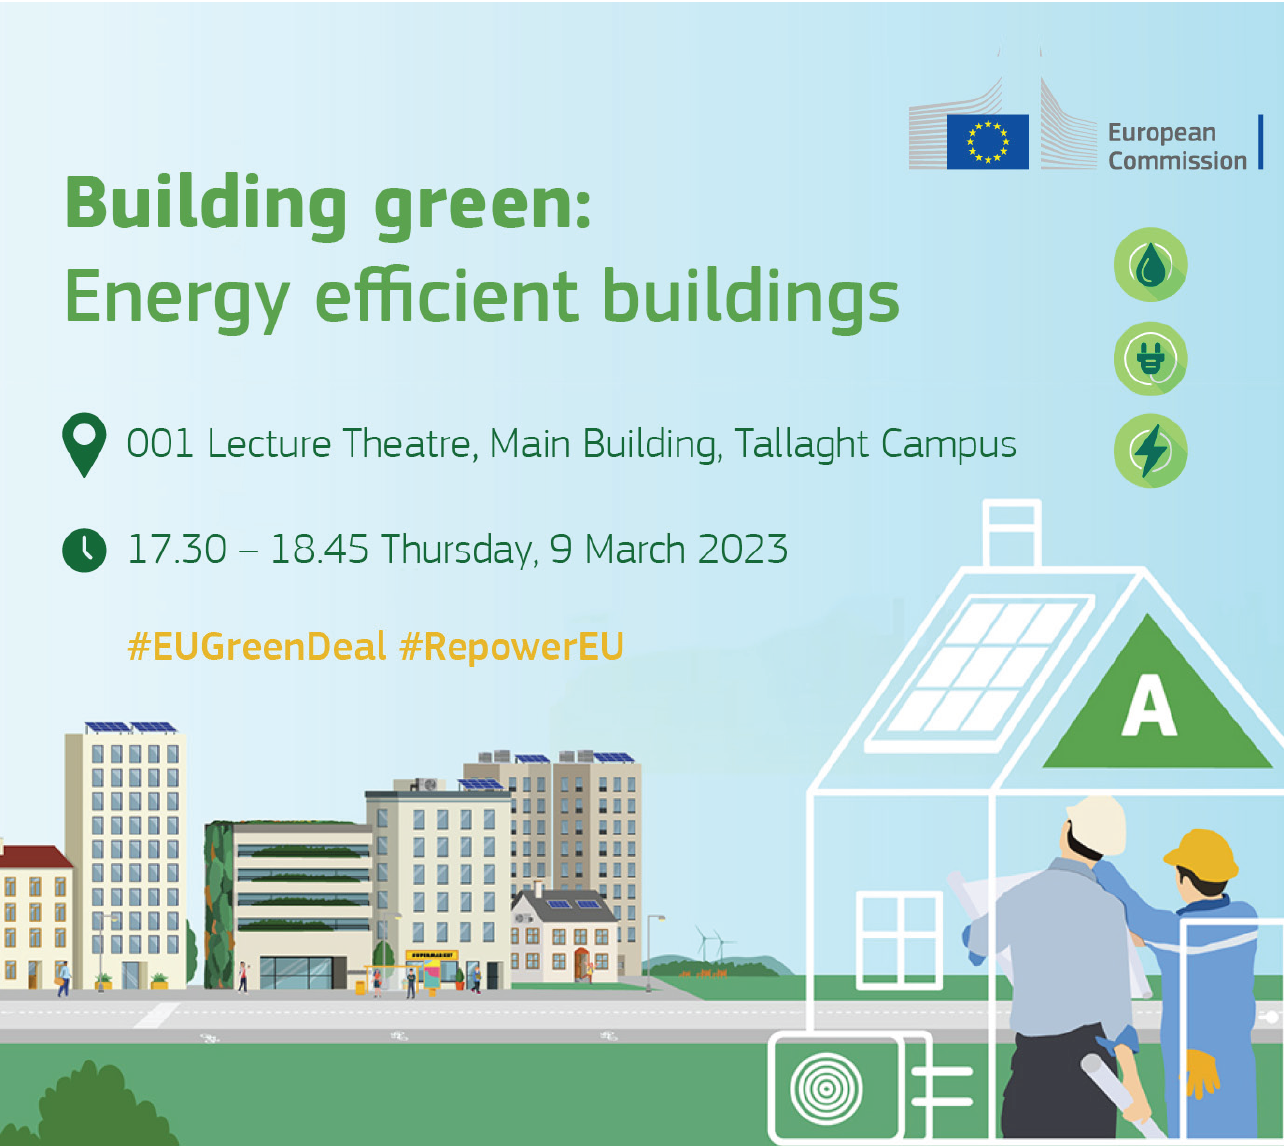 Image for TU Dublin hosts European Commission REPower EU panel event

